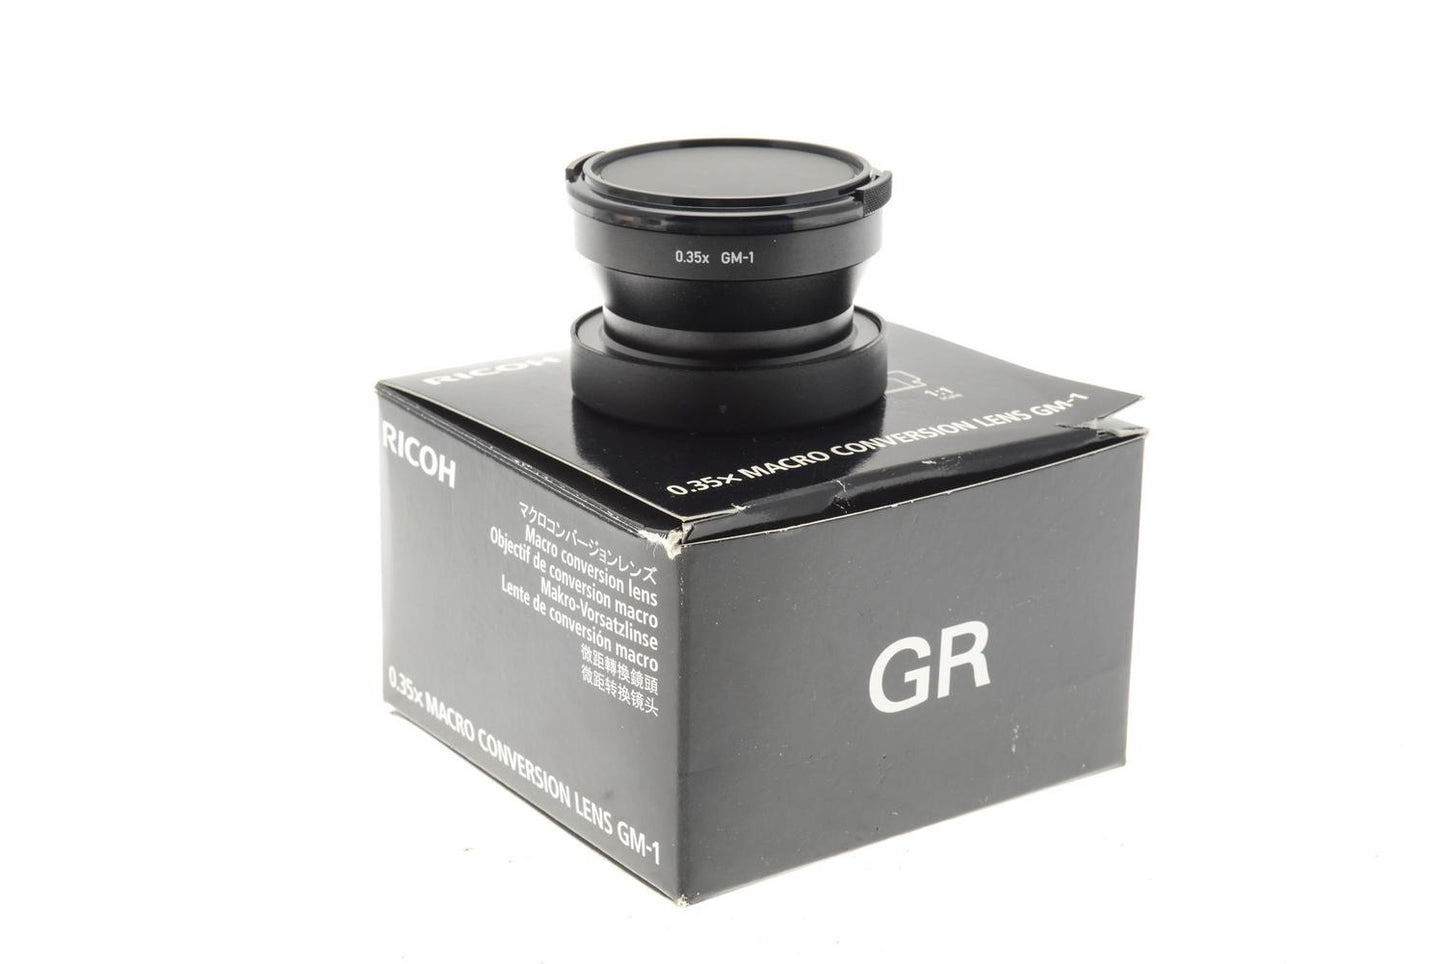 Ricoh Macro Conversion Lens GM-1 0.35x - Accessory